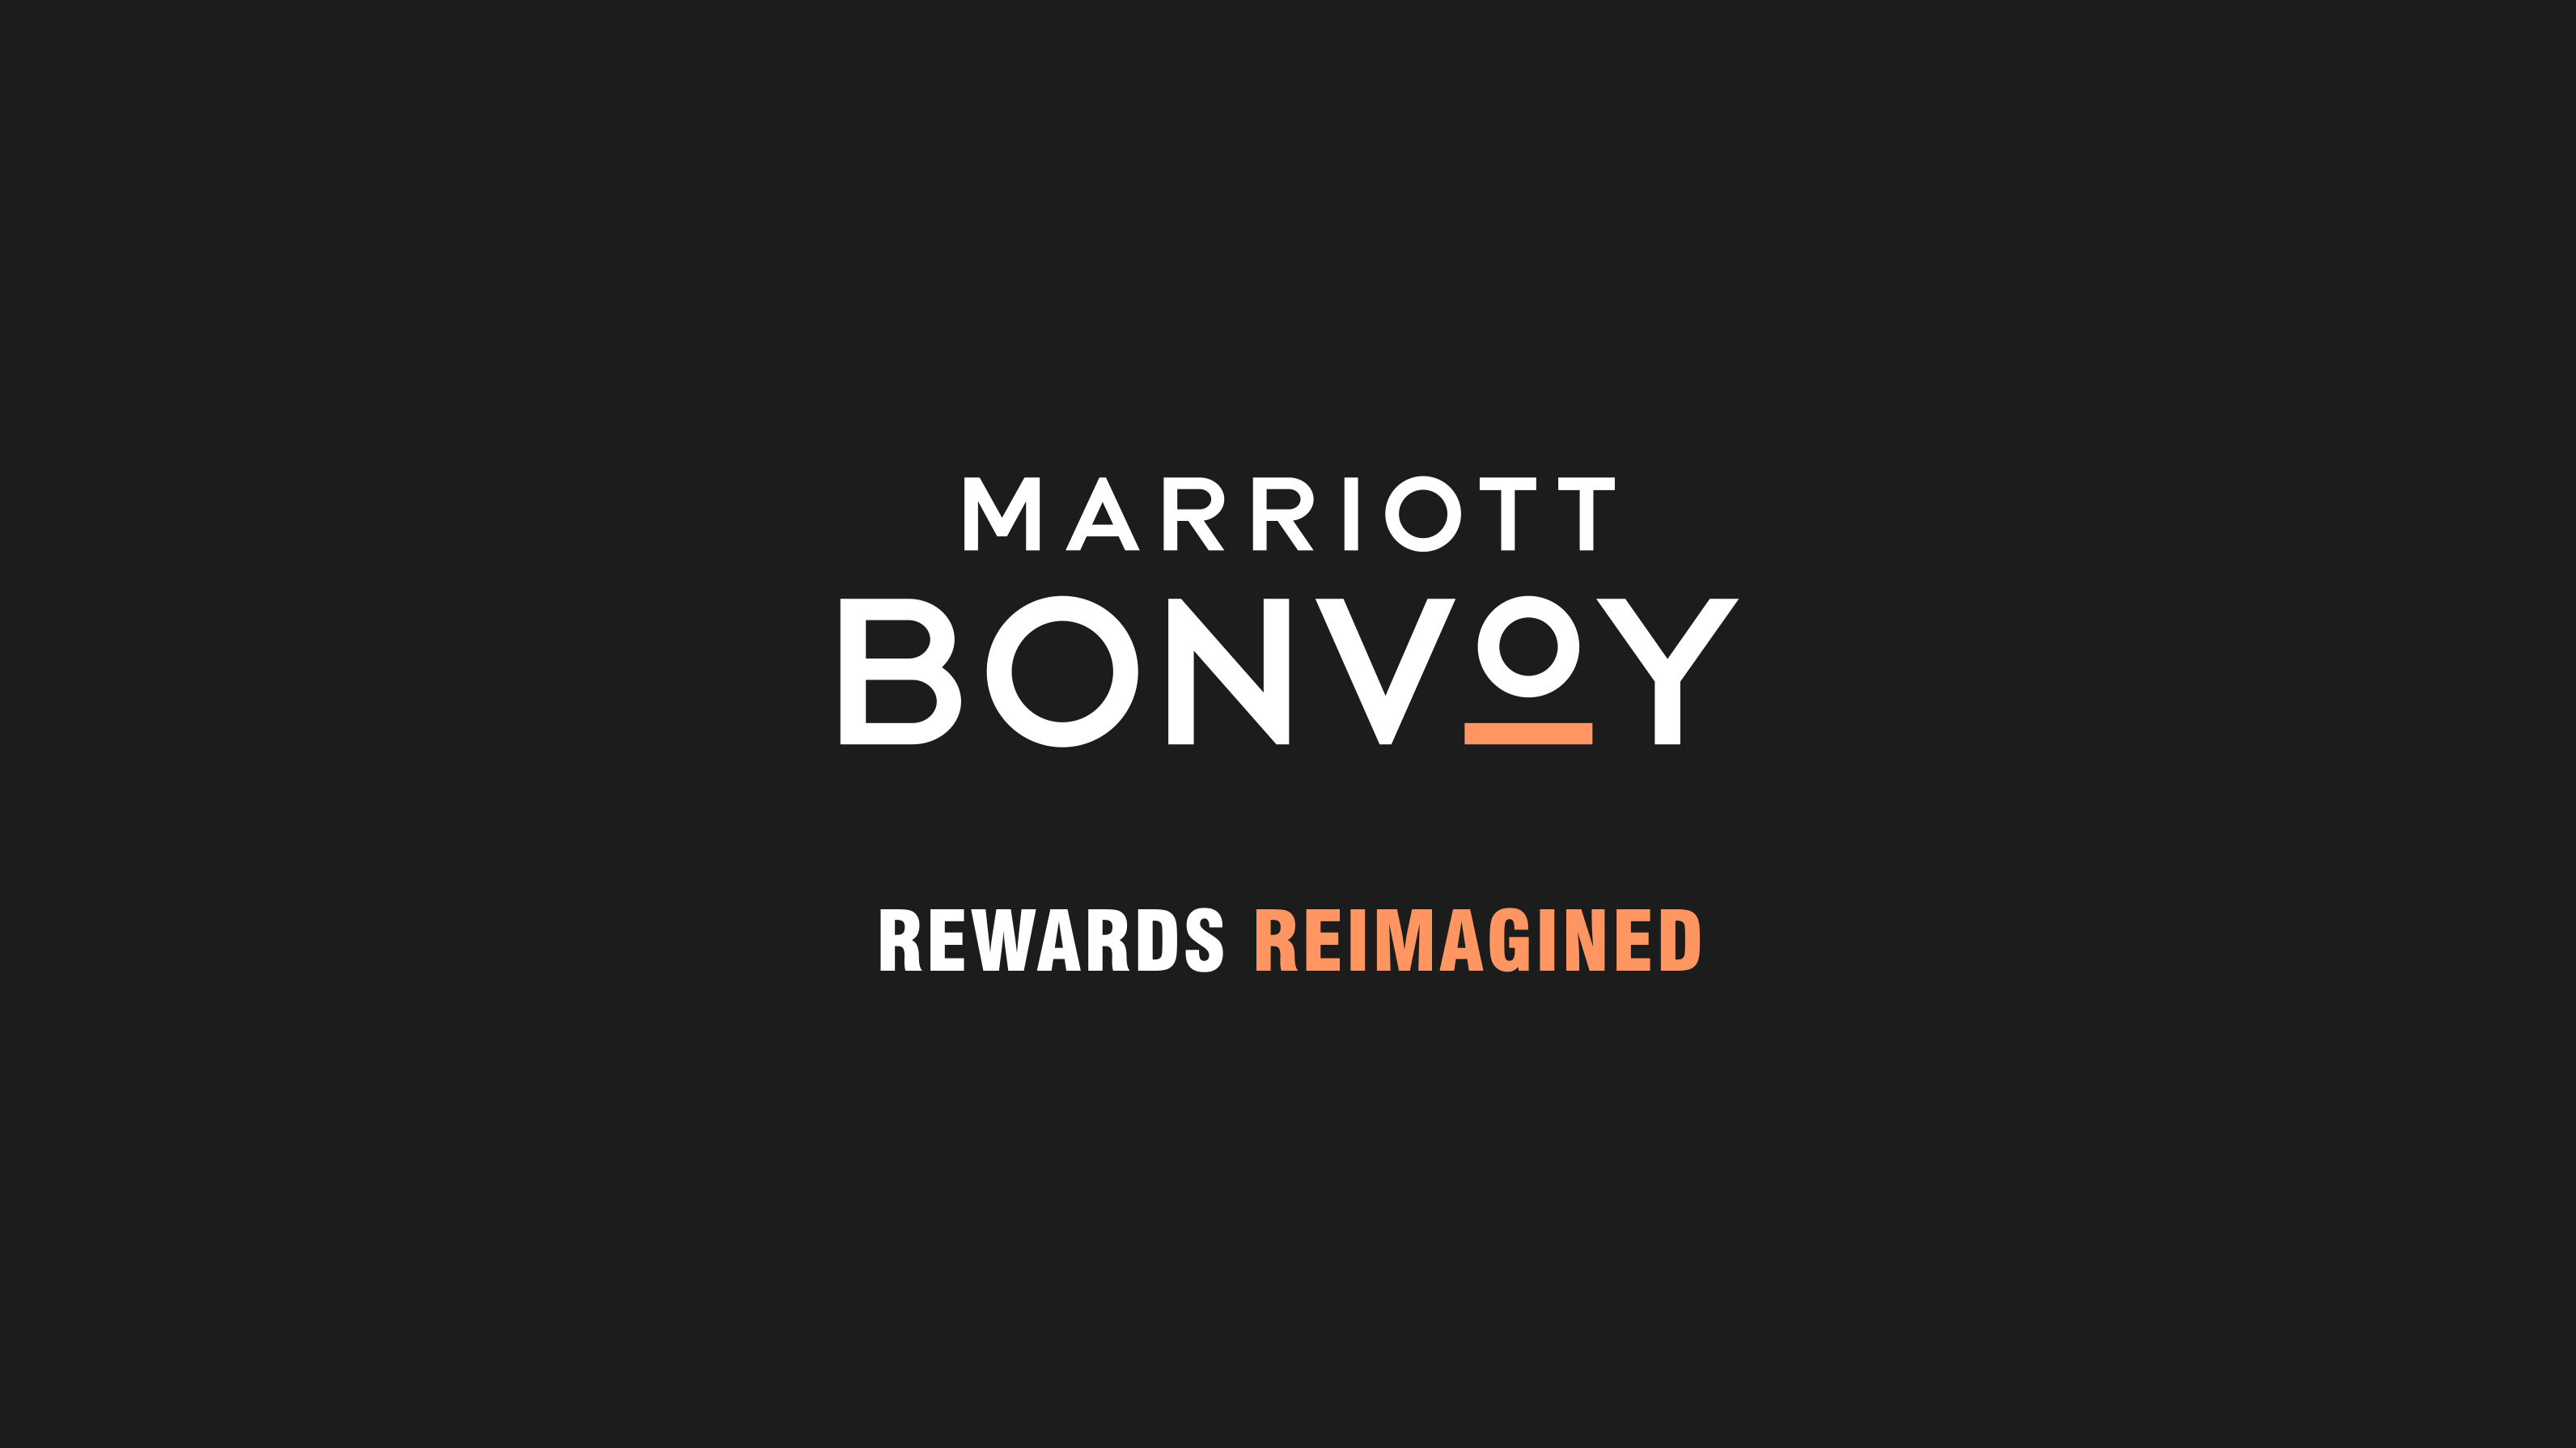 Marriott Bonvoy kicks off Global Marketing Campaign to introduce New